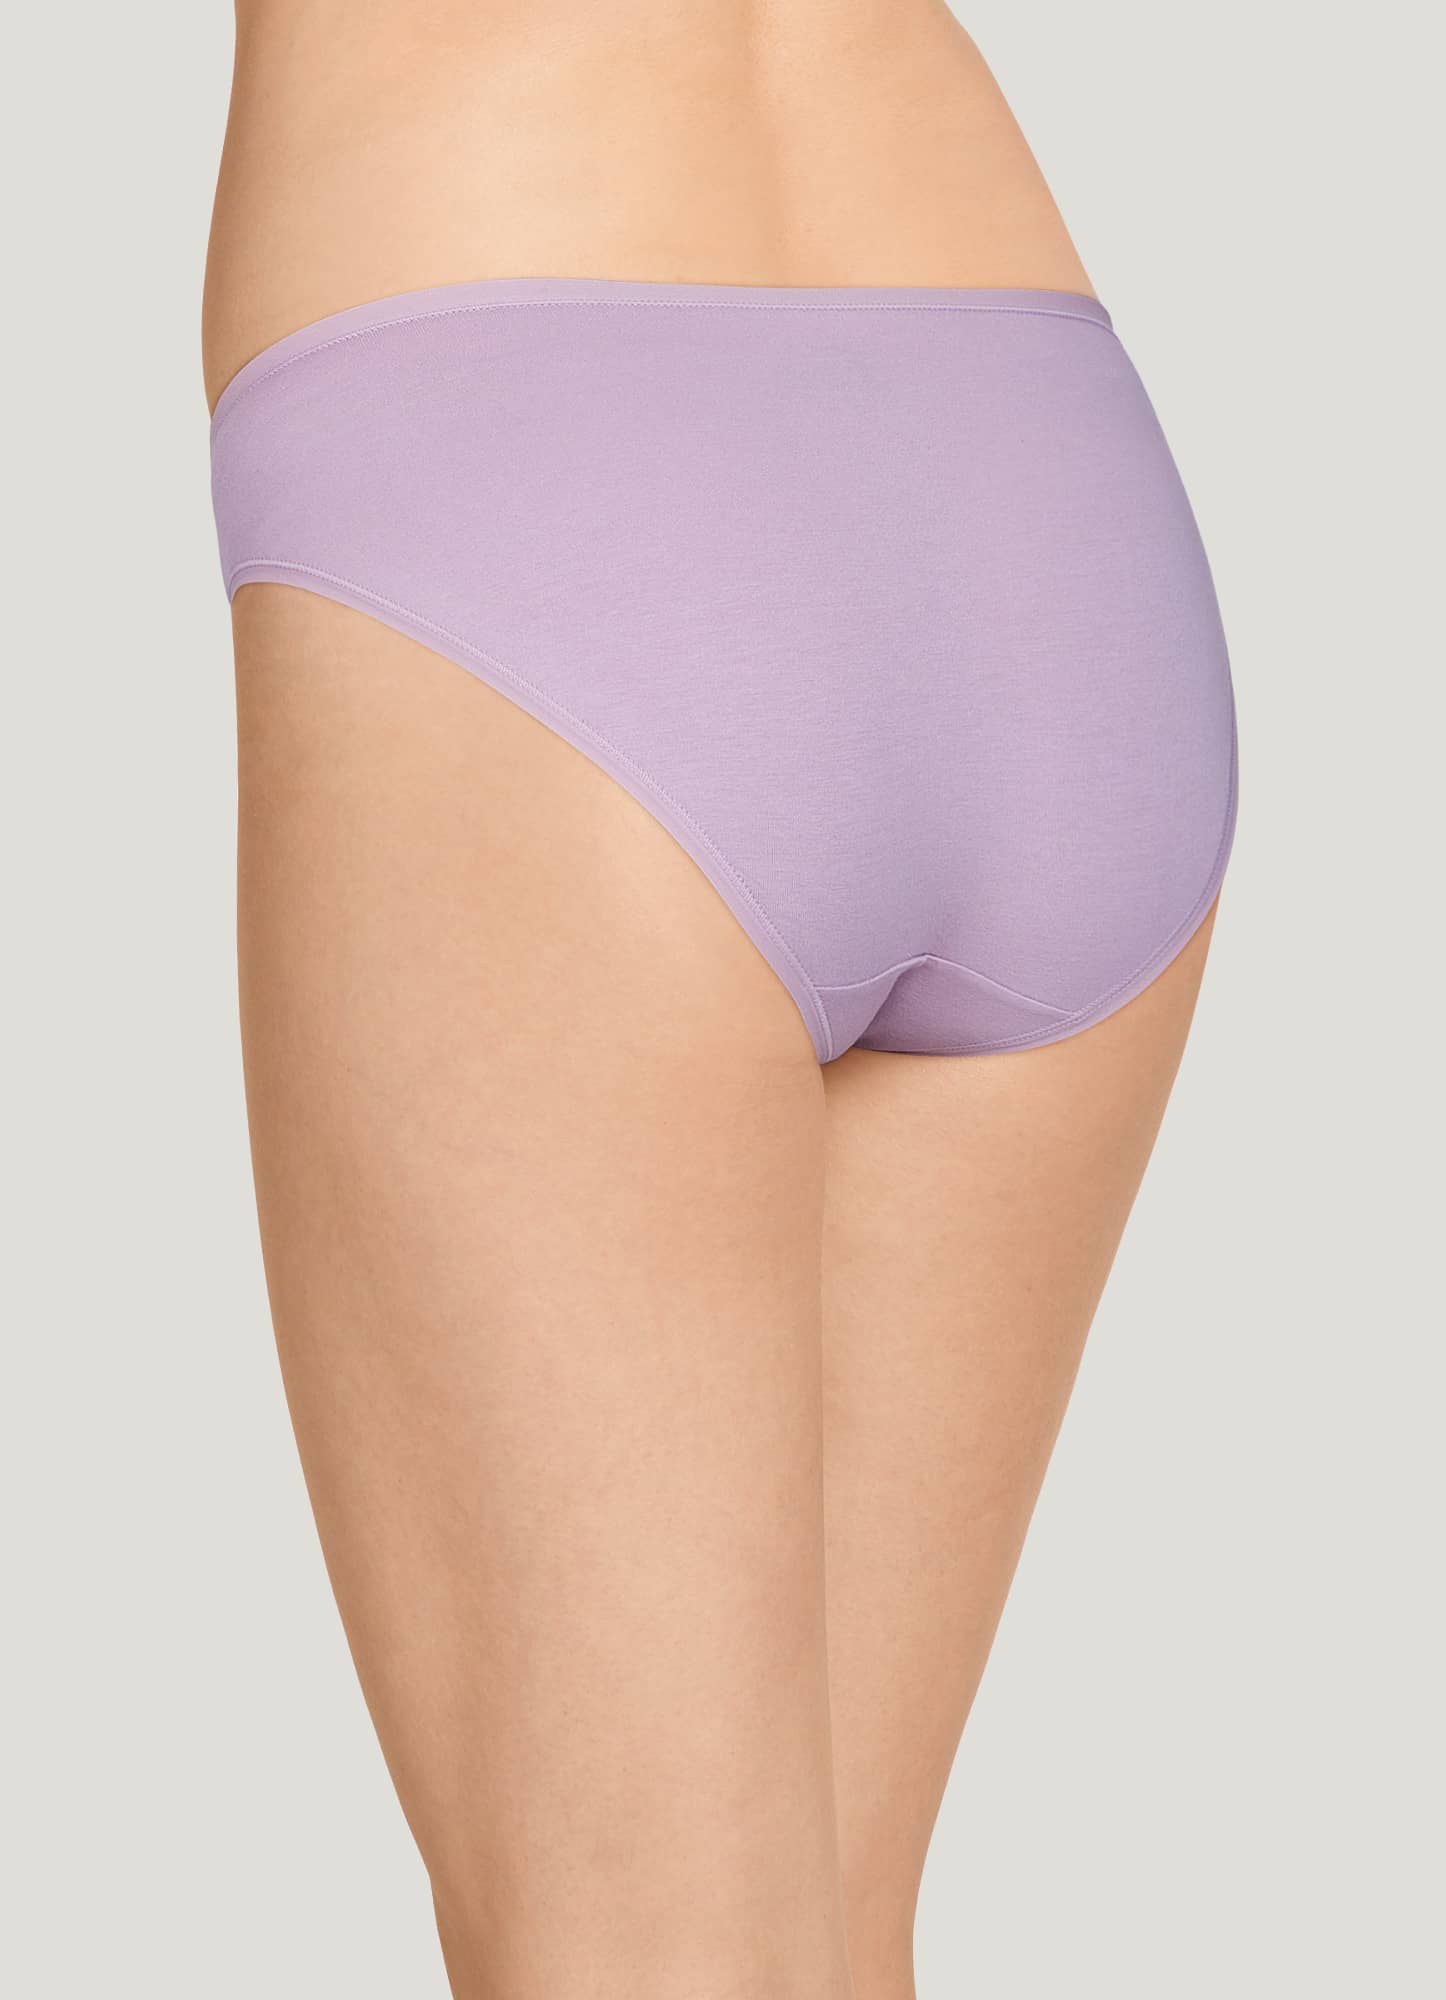 Jockey Women's Underwear Organic Cotton Stretch Logo Bikini - 6 Pack,  Almond/Light/Ivory, S at  Women's Clothing store